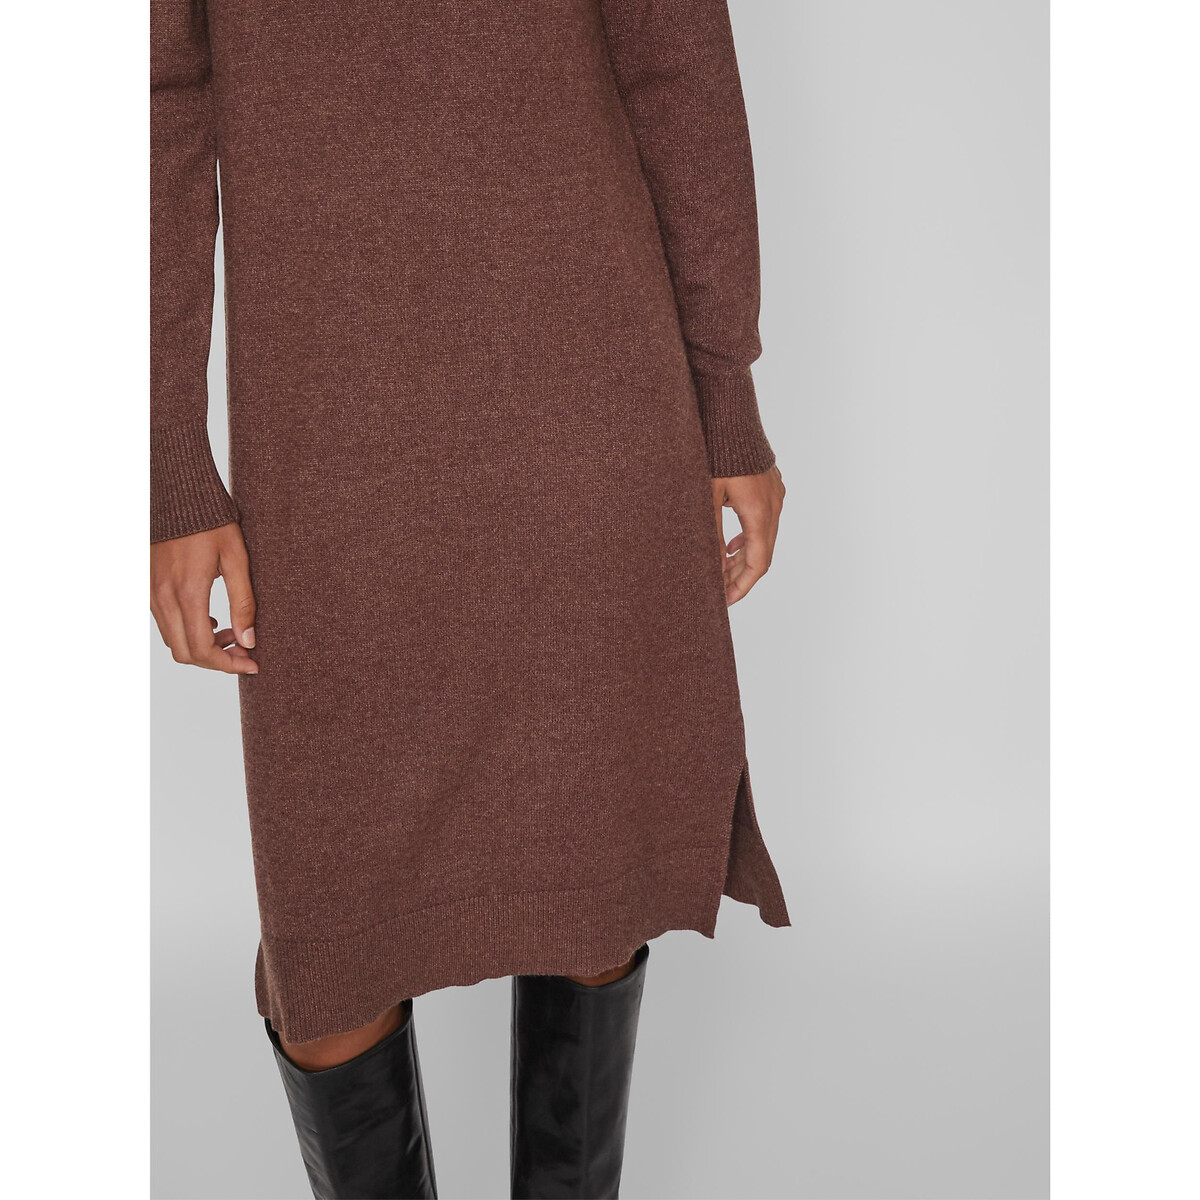 Платье-пуловер Миди из тонкого трикотажа воротник-стойка S каштановый LaRedoute, размер S - фото 3